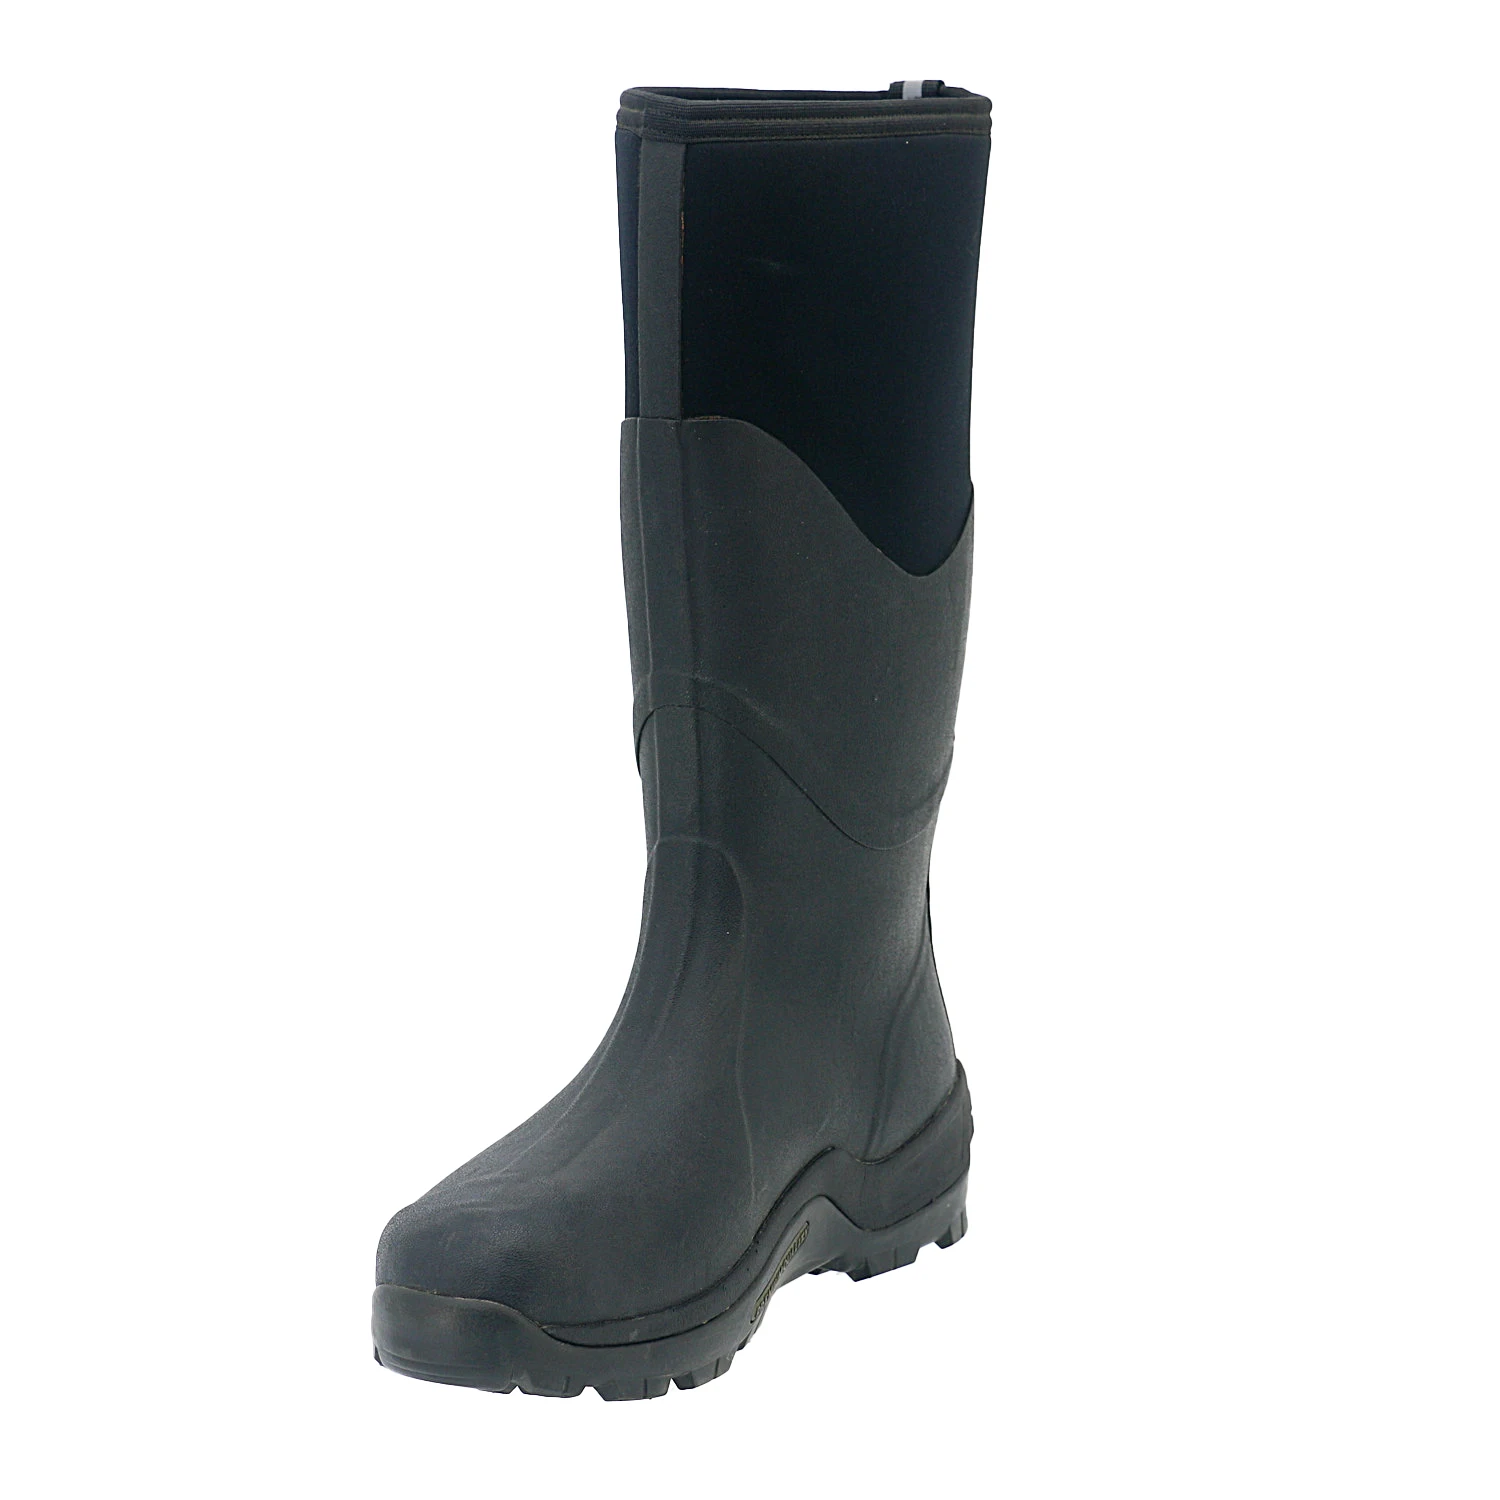 Waterproof Durable Unique Design Rain Boots Neoprene Hunting Boots Warm ...